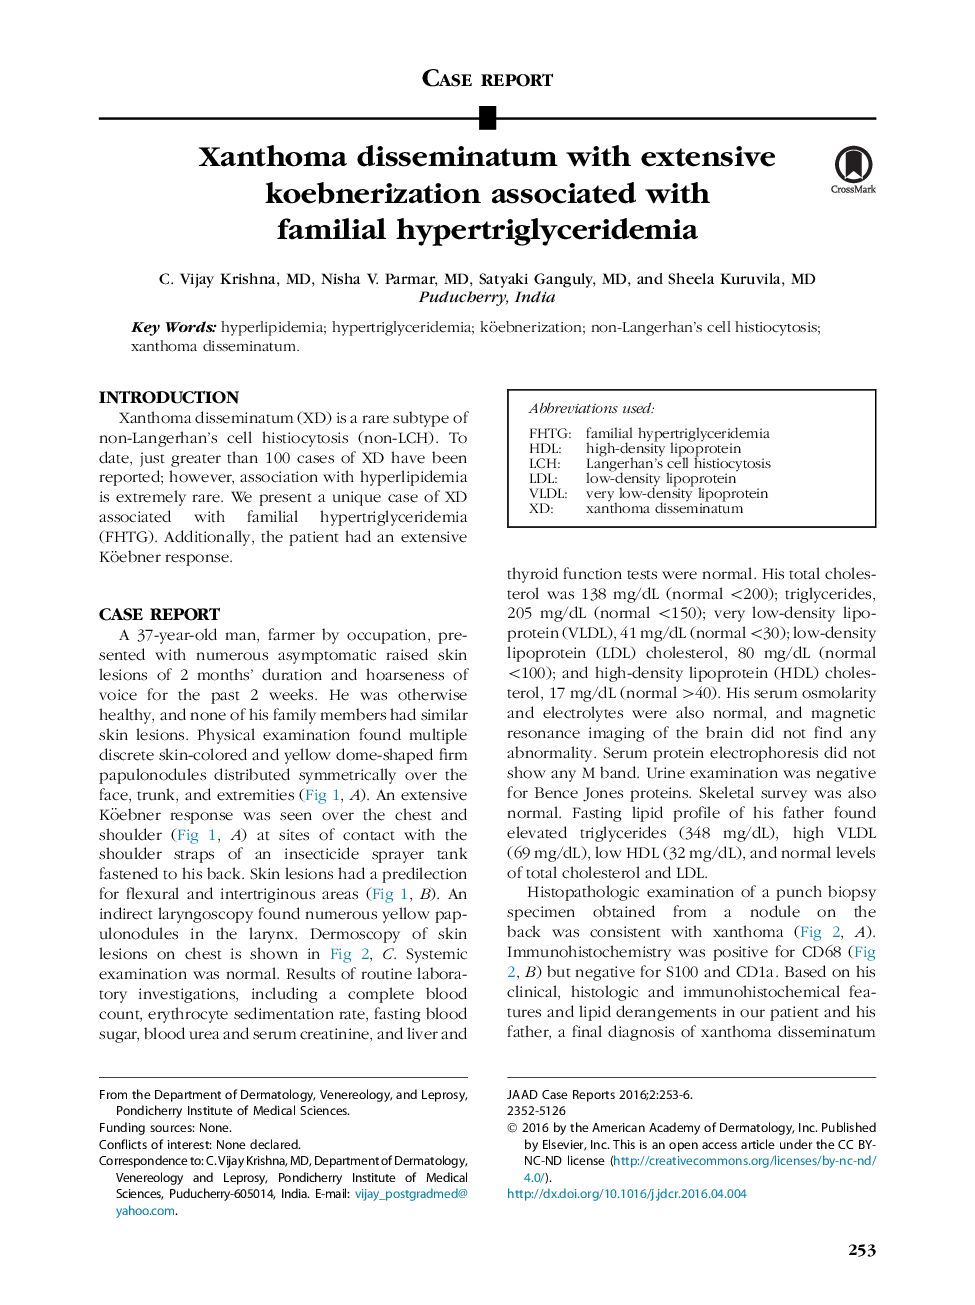 Xanthoma disseminatum with extensive koebnerization associated with familial hypertriglyceridemia